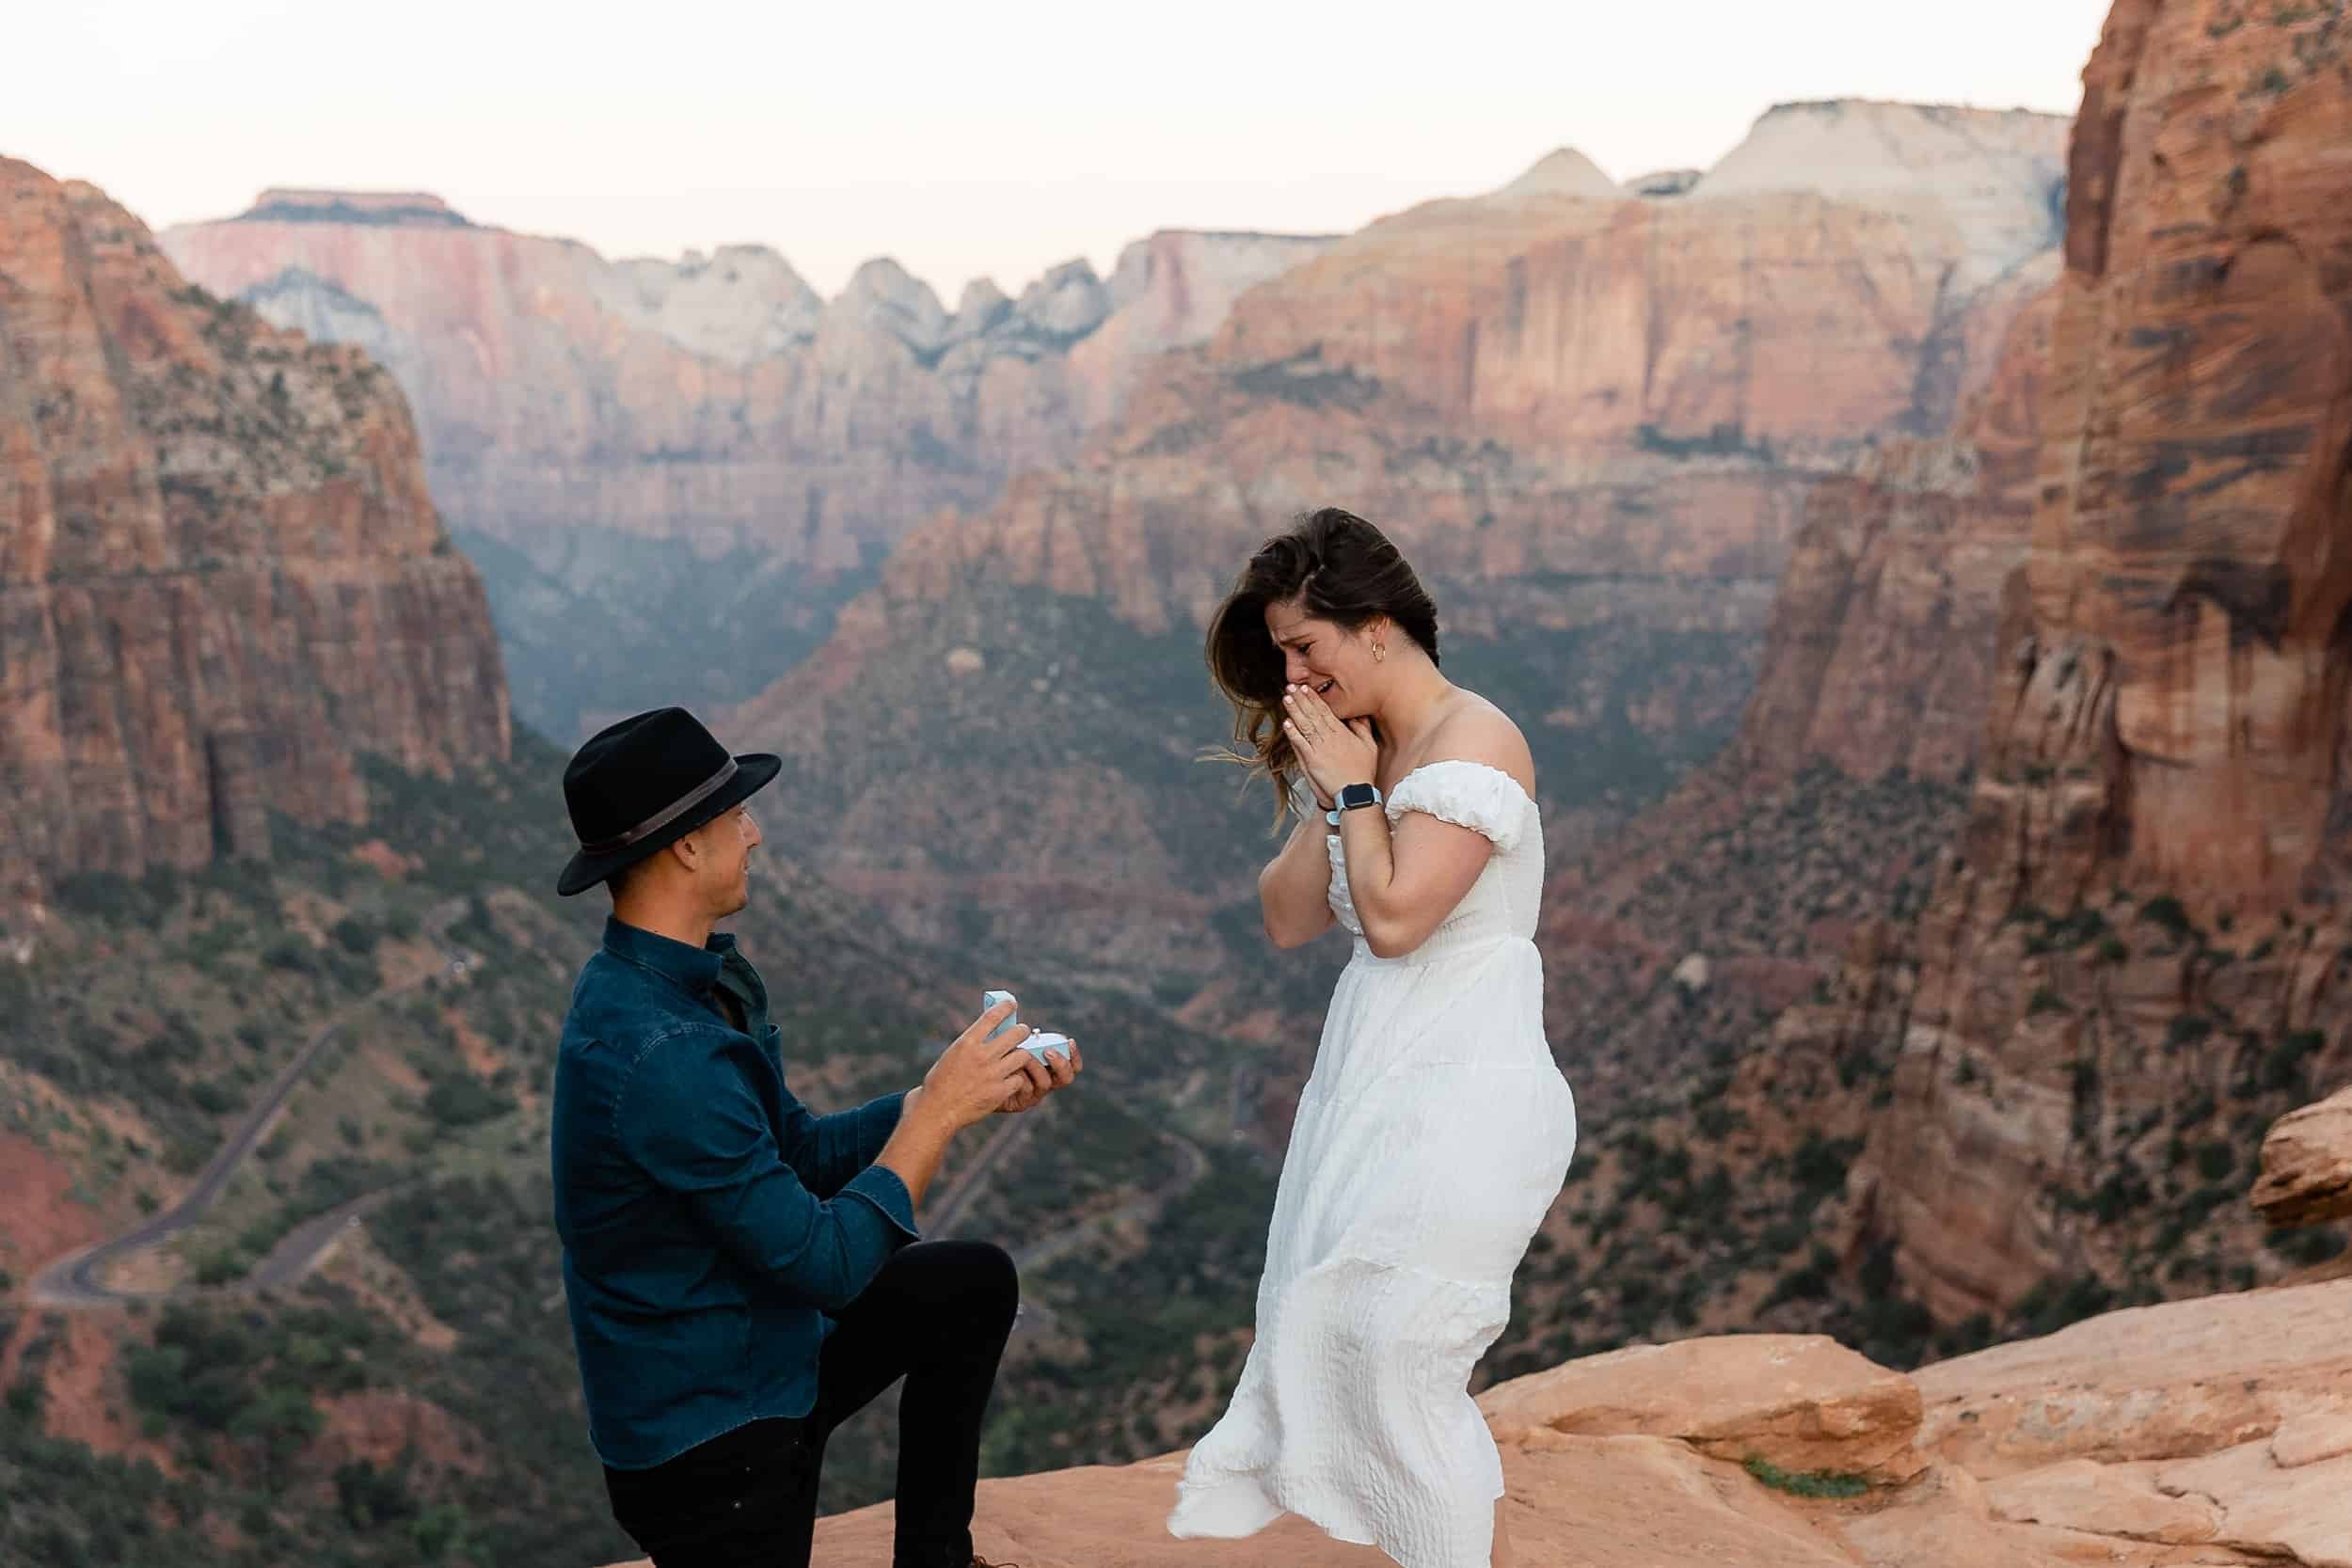 Utah surprise proposal photographer